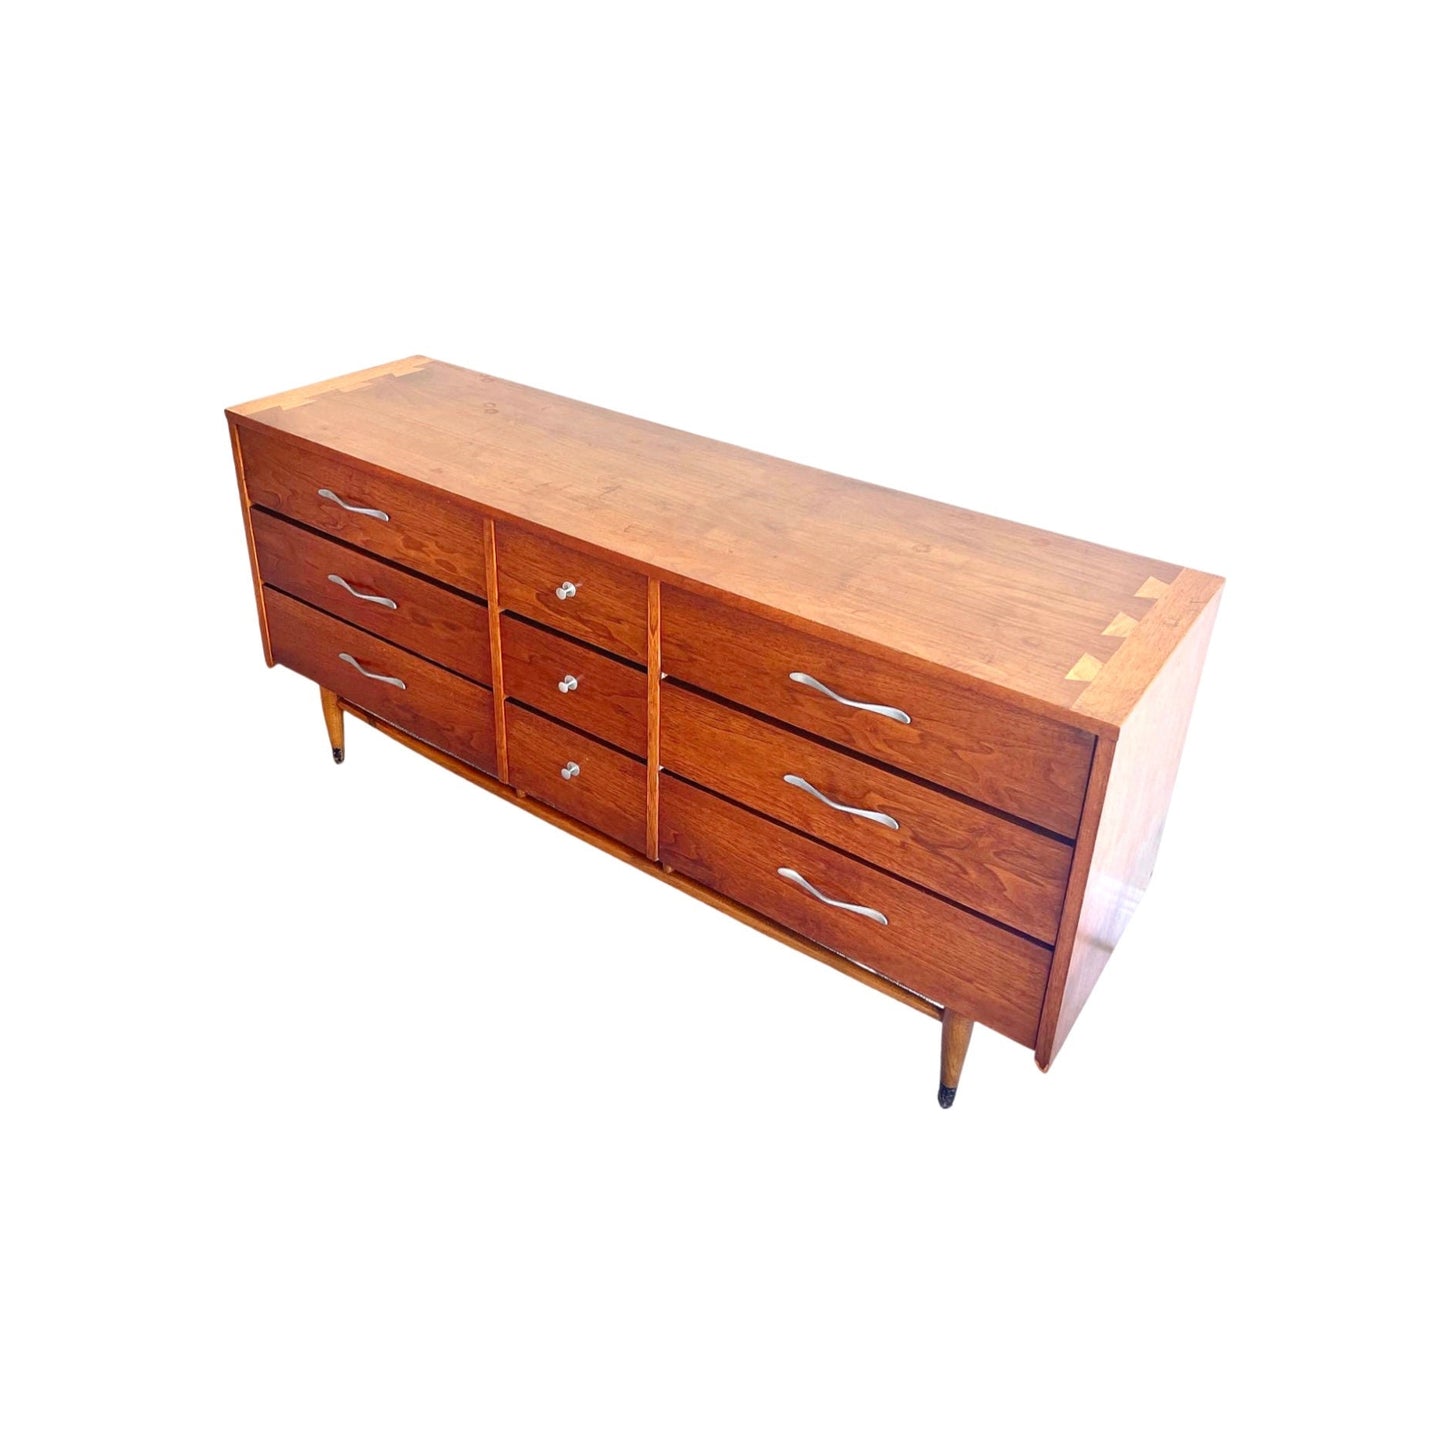 Dovetail Design on Oak and Walnut Dresser Top